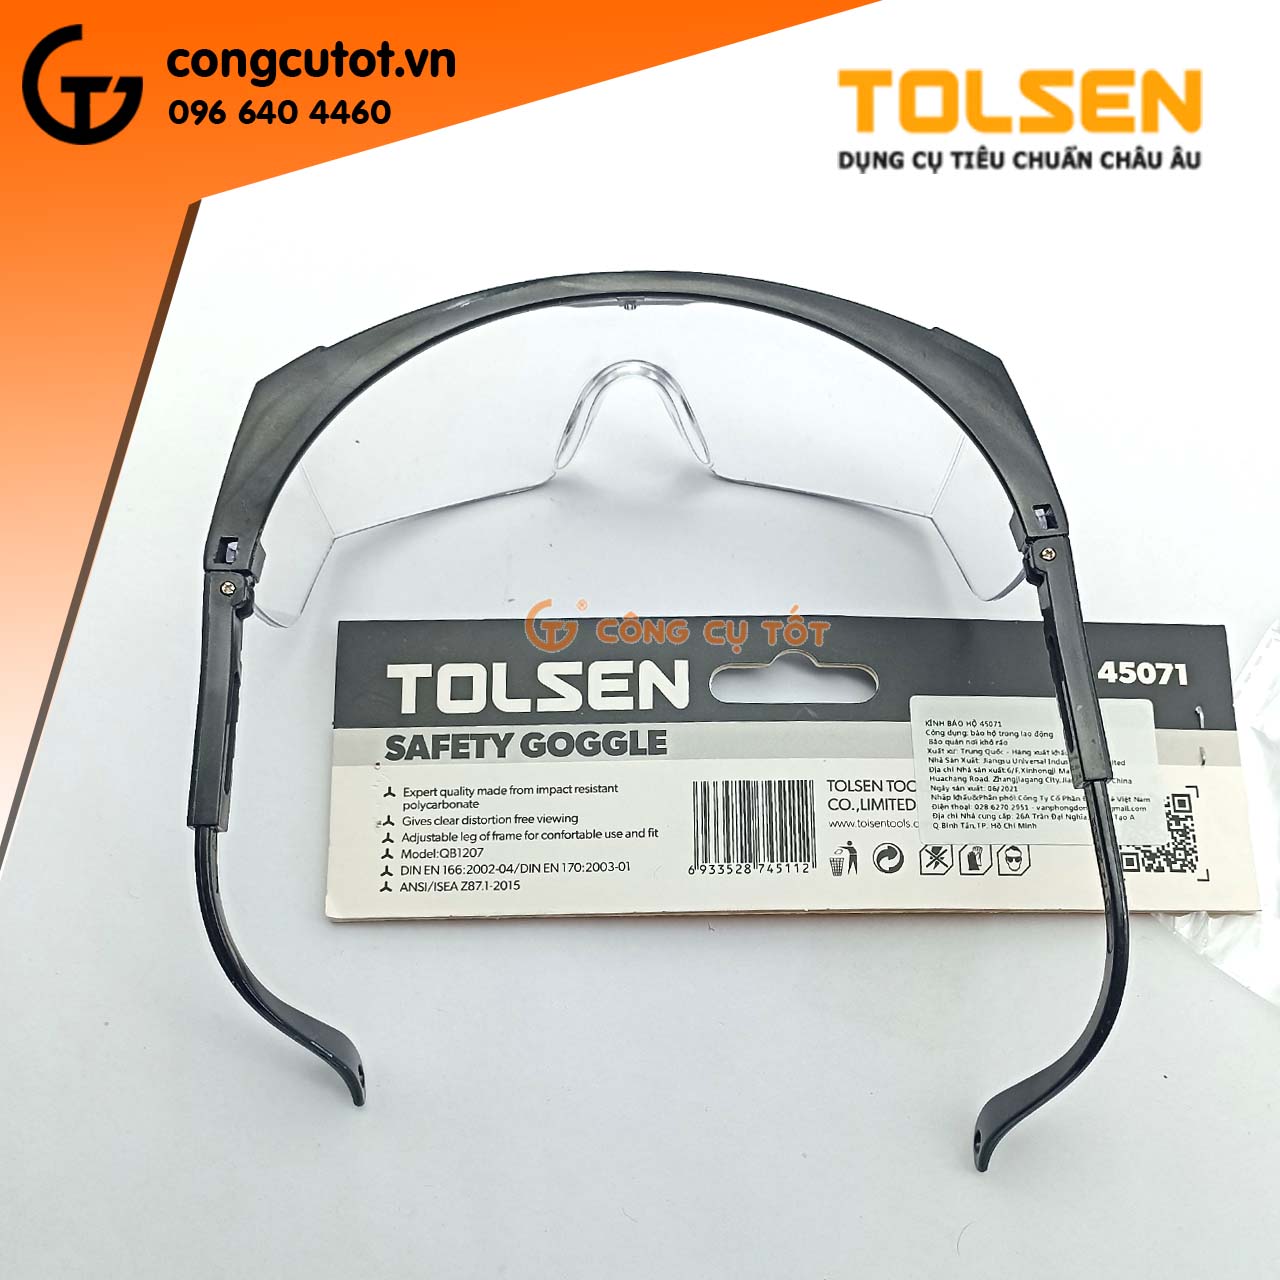 Tolsen 45071 safety goggle